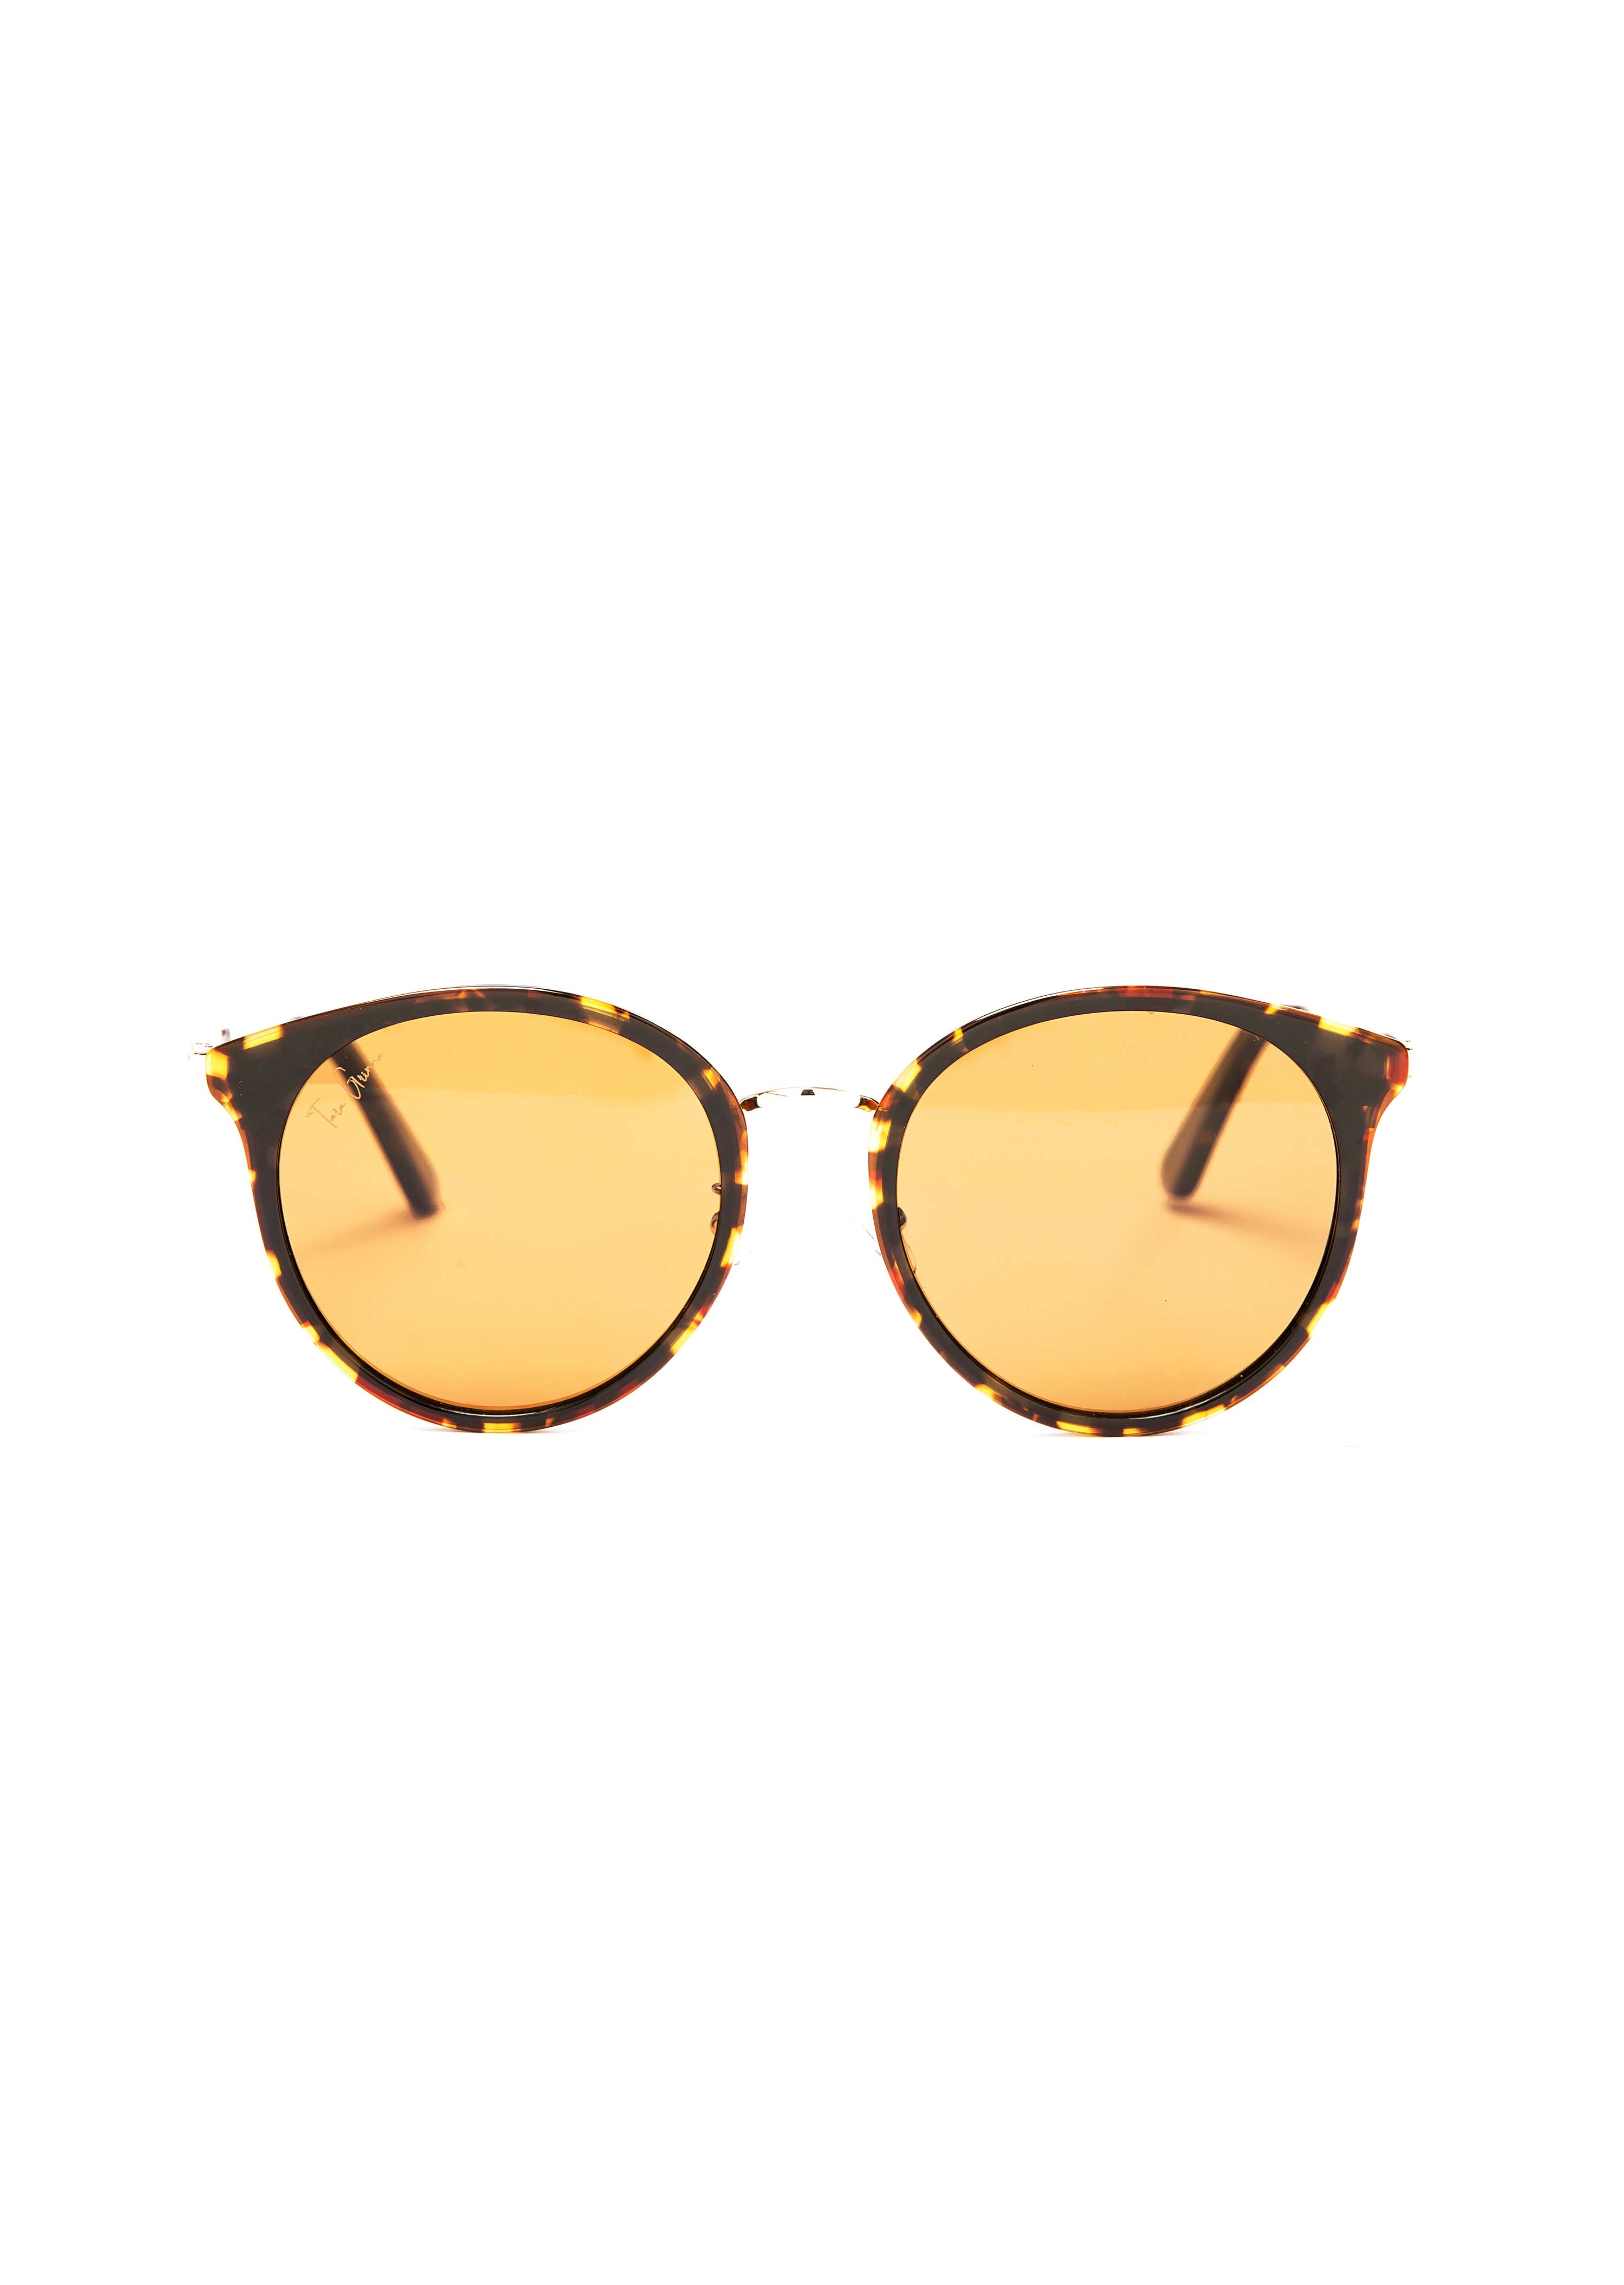 Cheap Sun Protection Round Framed Sunglasses Fashion Trend Everyday  Sunglasses Women Outdoor Sunglasses | Joom